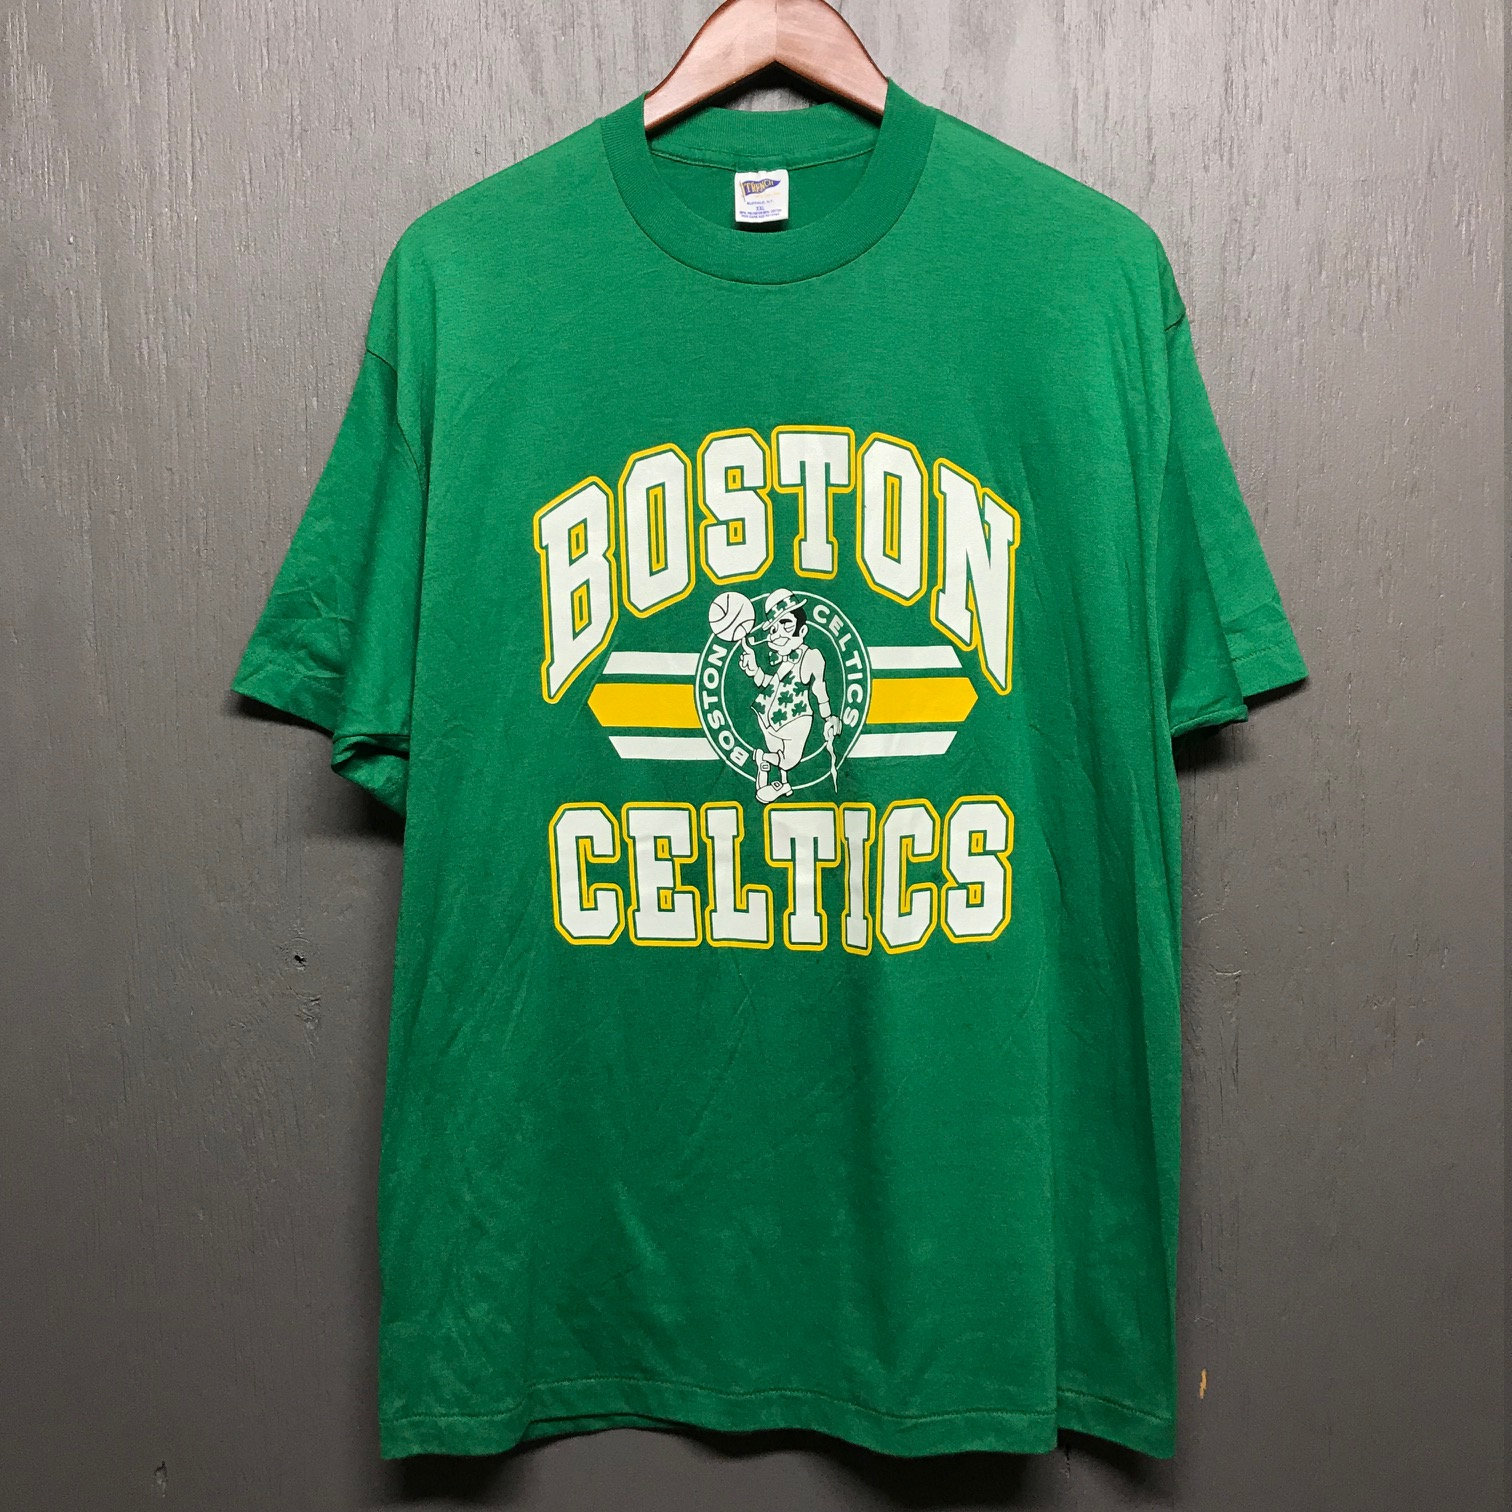 L/XL nos thin vtg 80s Boston Celtics t shirt